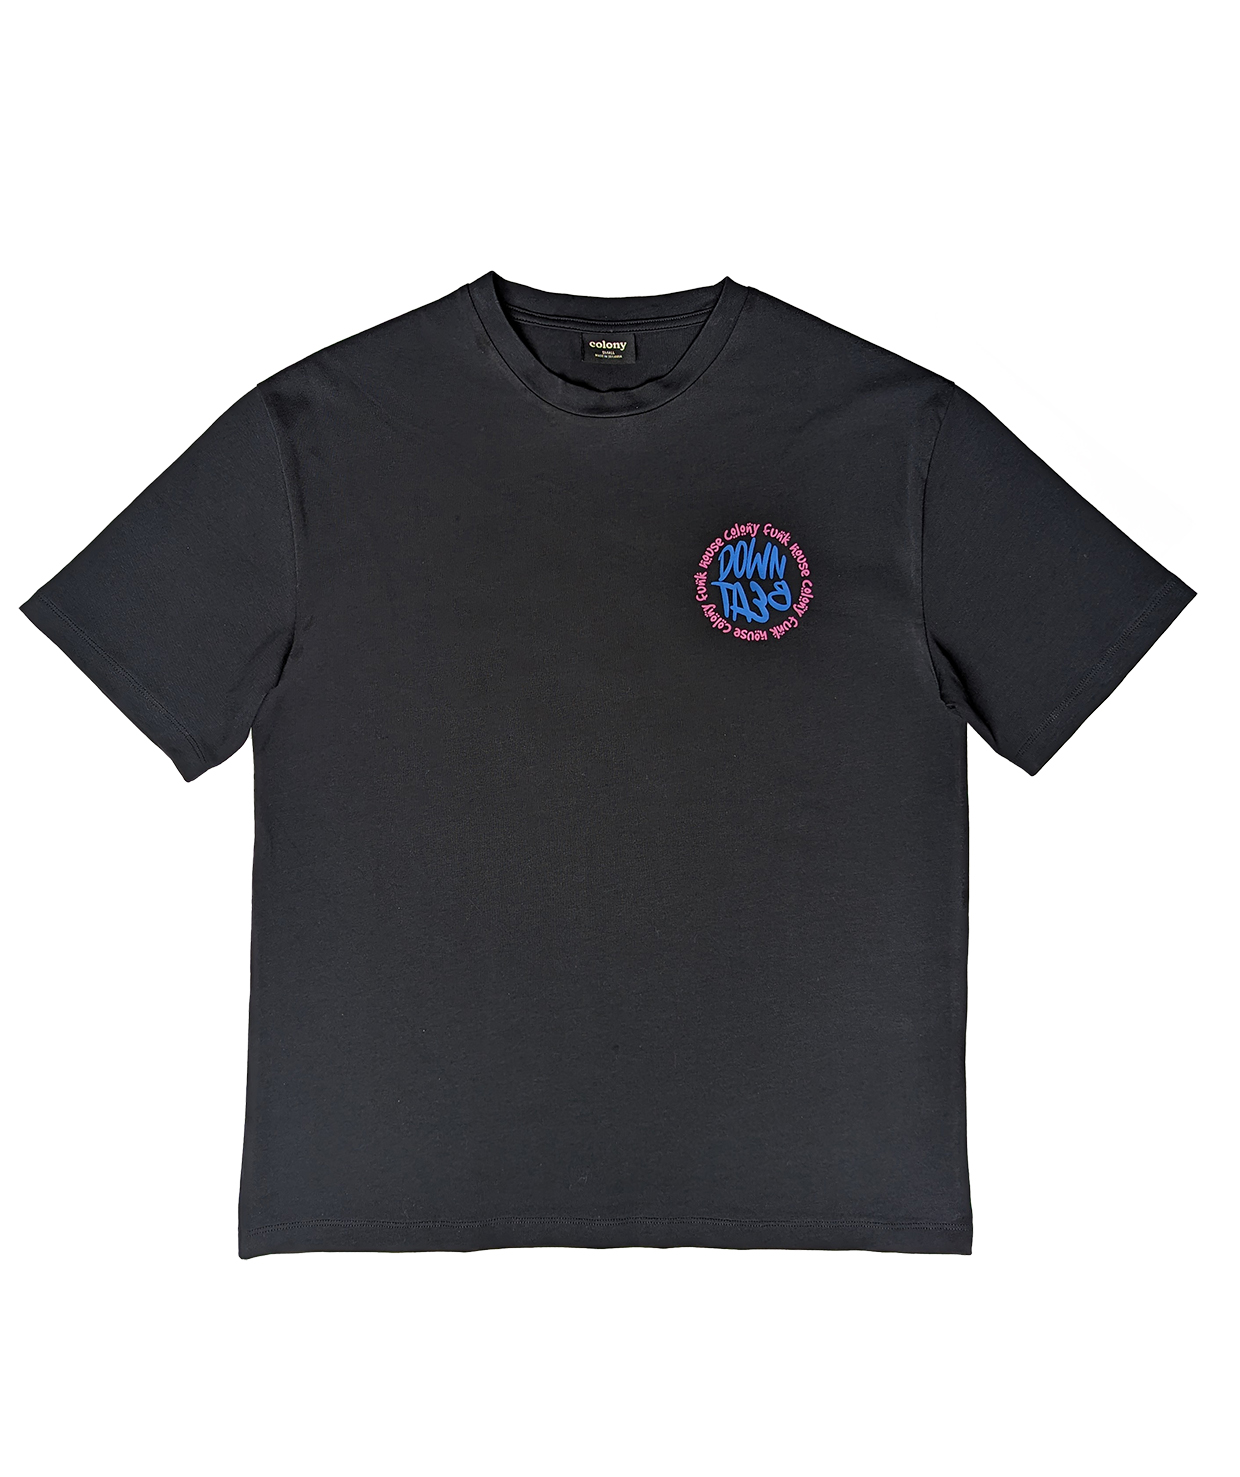 Oversized Graphic Tshirt - Down Beat - Black